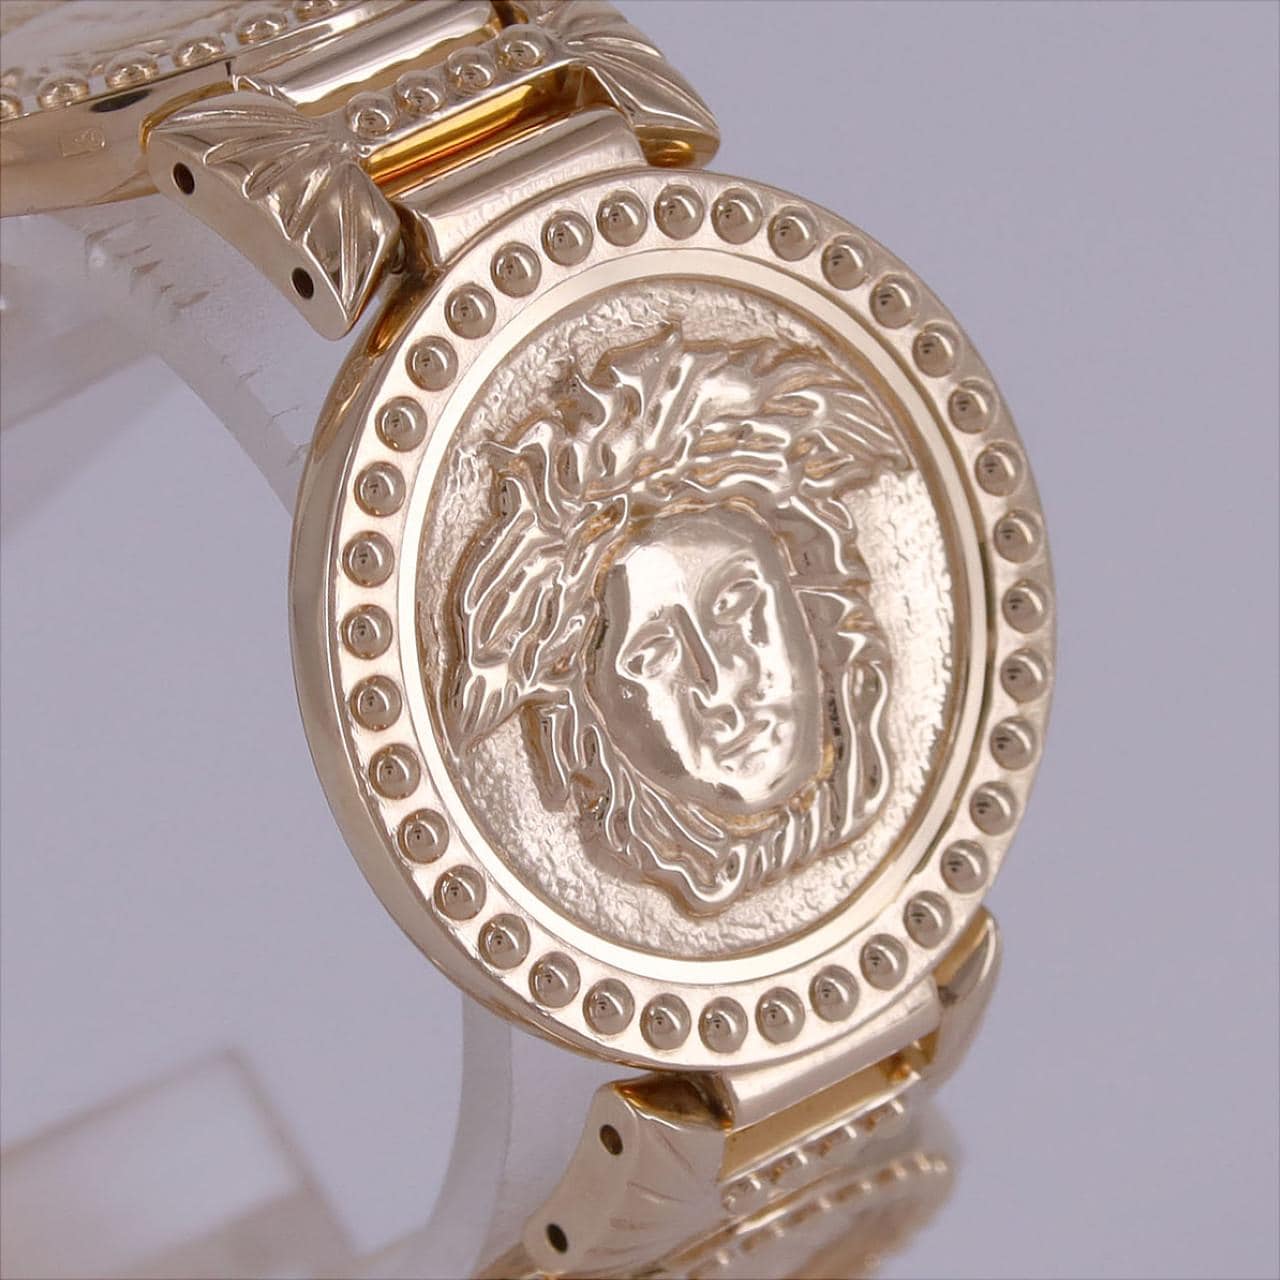 GIANNI VERSACE Medusa Coin Watch YG/D･12P 8008005 YG Quartz